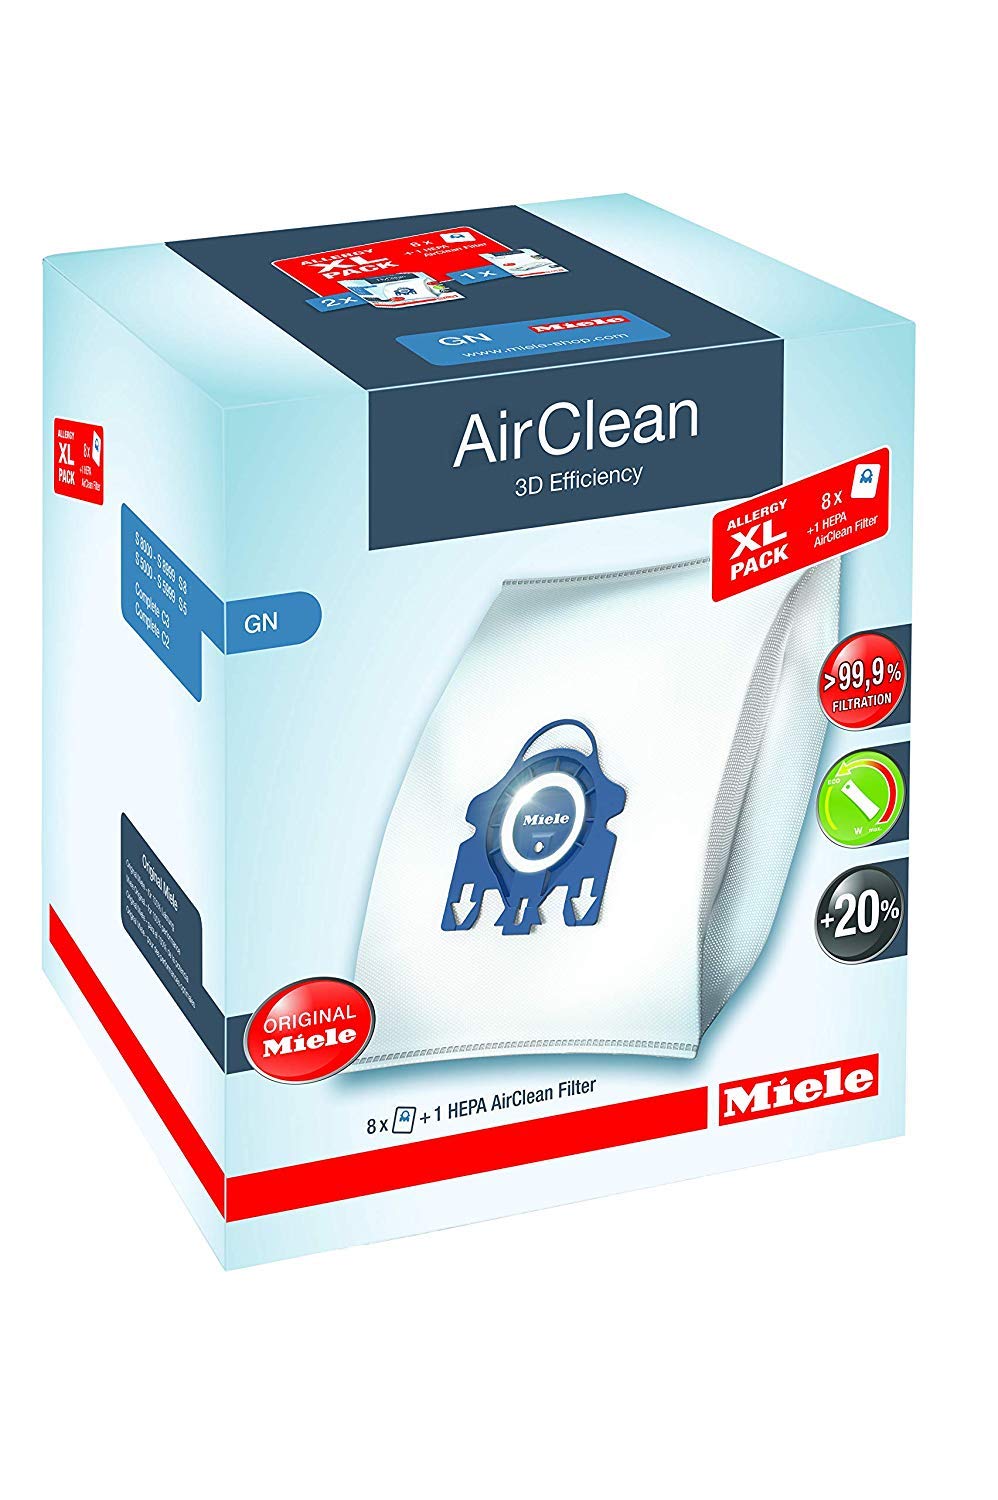 Miele AirClean 3D 効率ダストバッグ、タイプ GN、アレルギー XL パック、バッグ 8 個、...